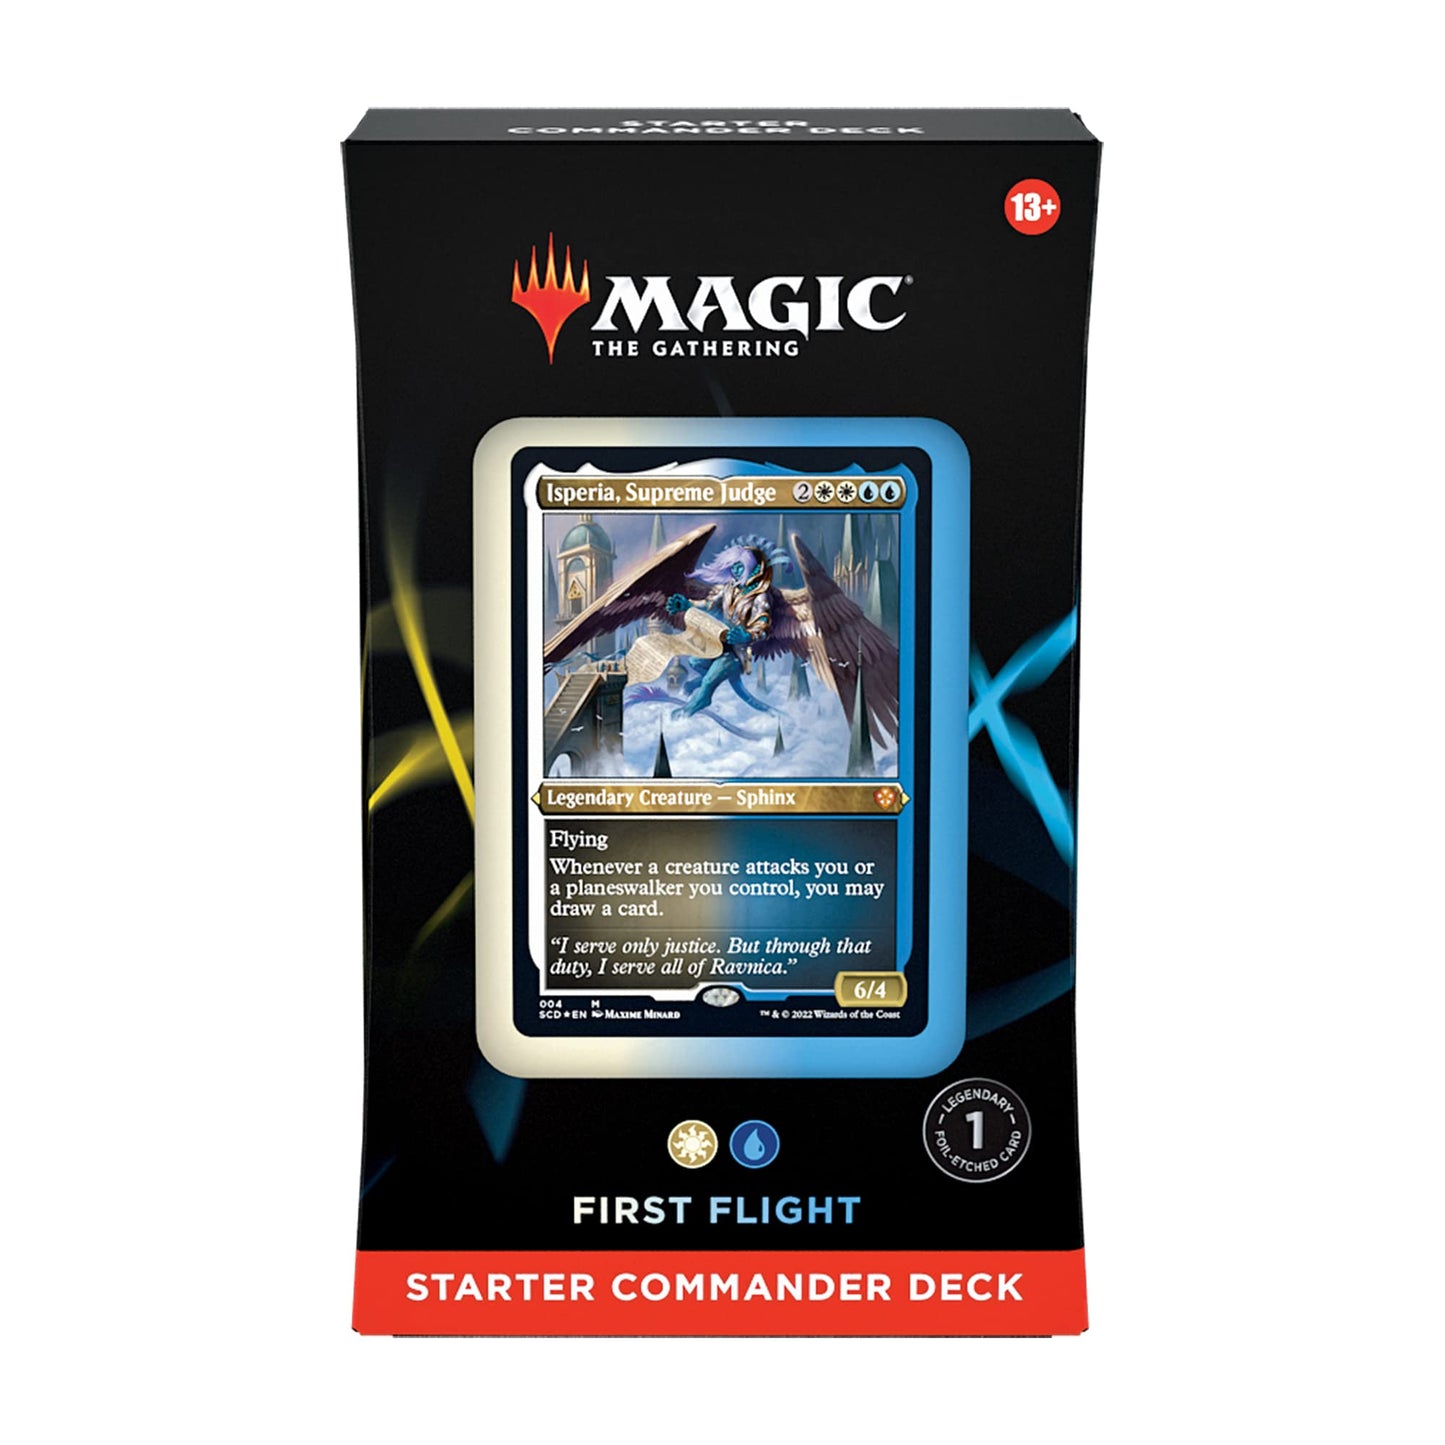 Magic: The Gathering Starter Commander Deck Bundle – Includes All 5 Decks